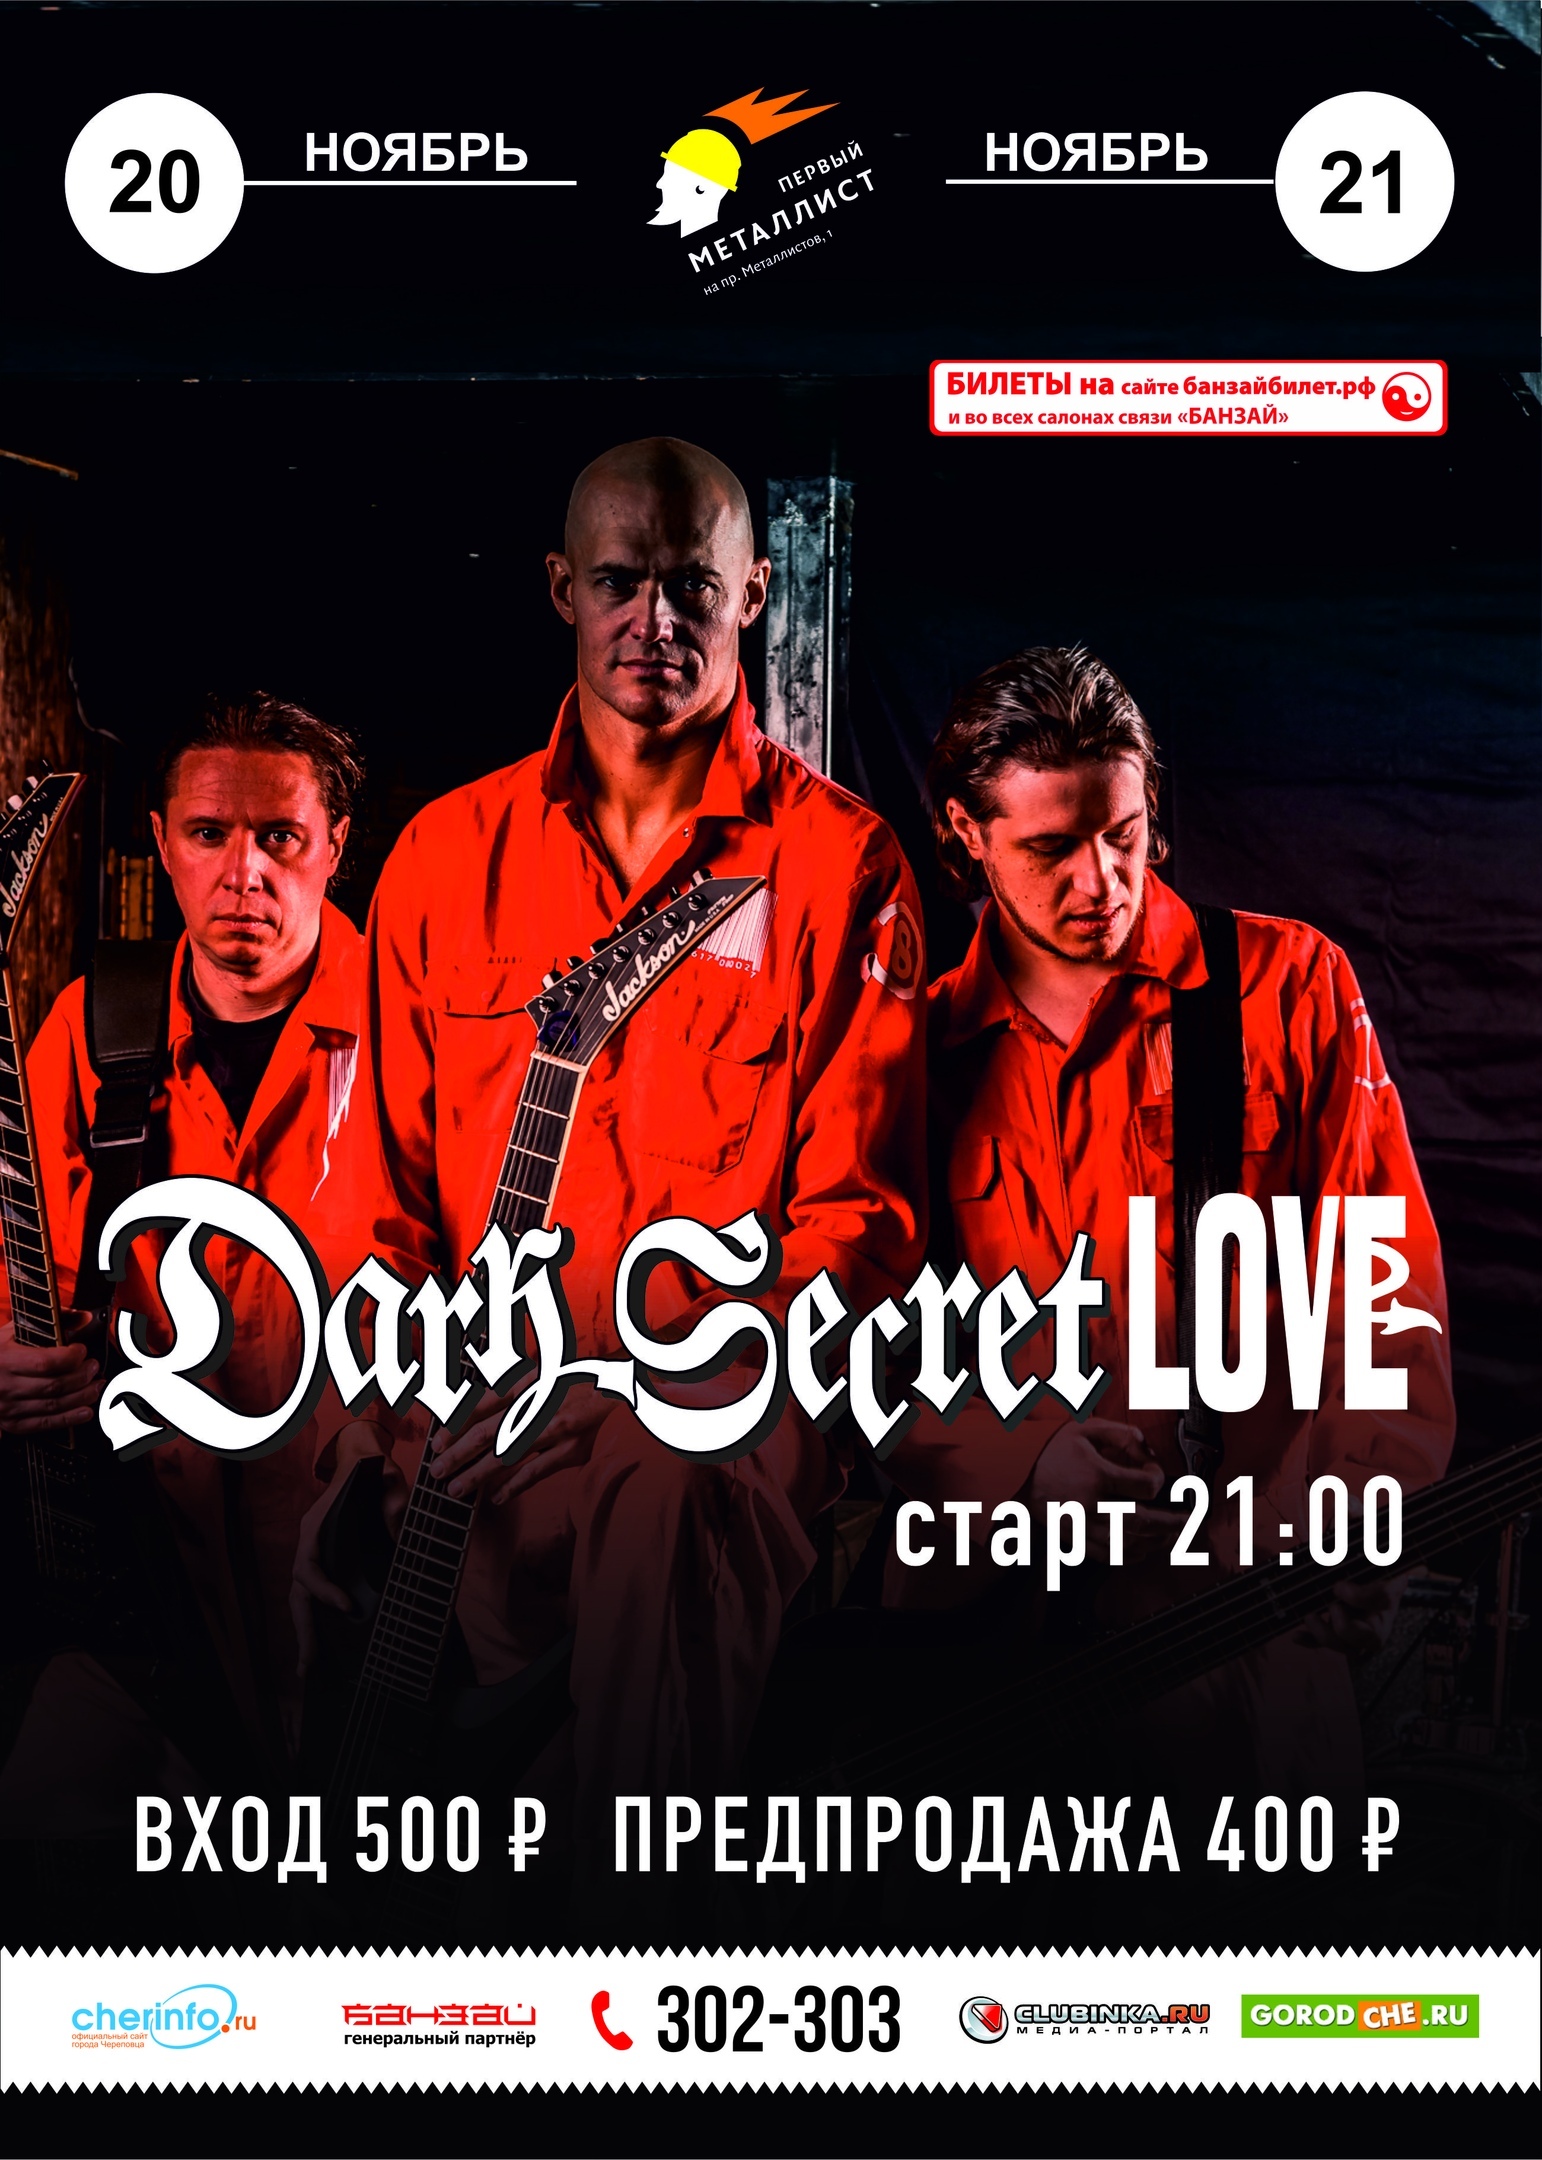 Dark Secret Love Череповец 20.11.2020